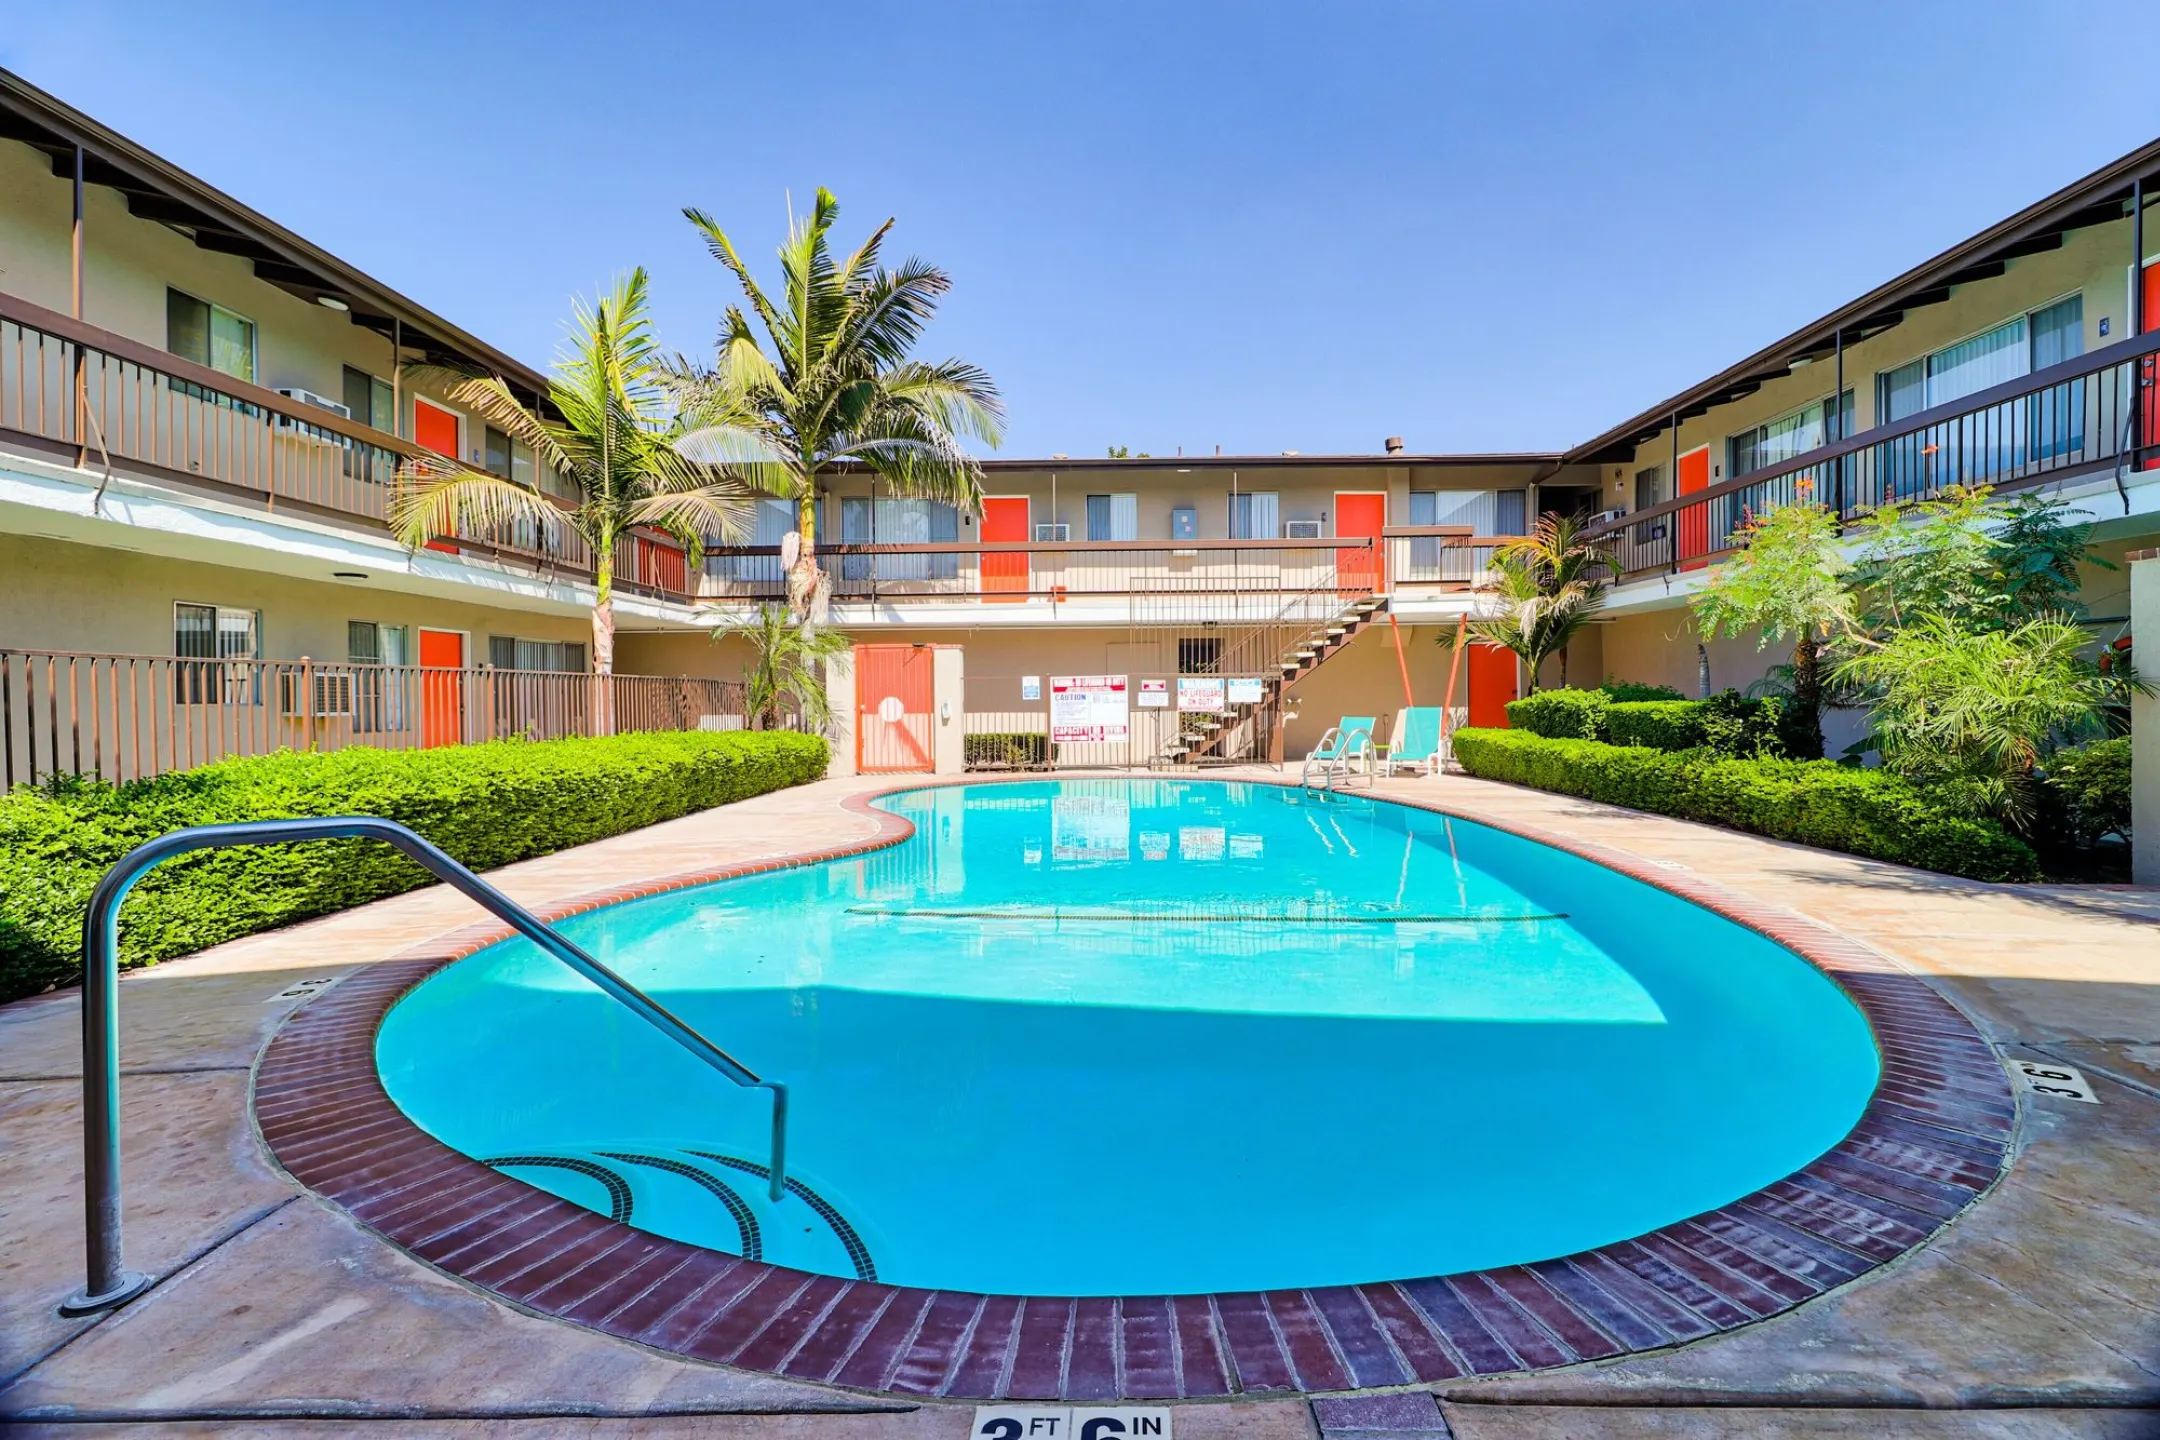 Pool - Towne Center Apartments - Riverside, CA